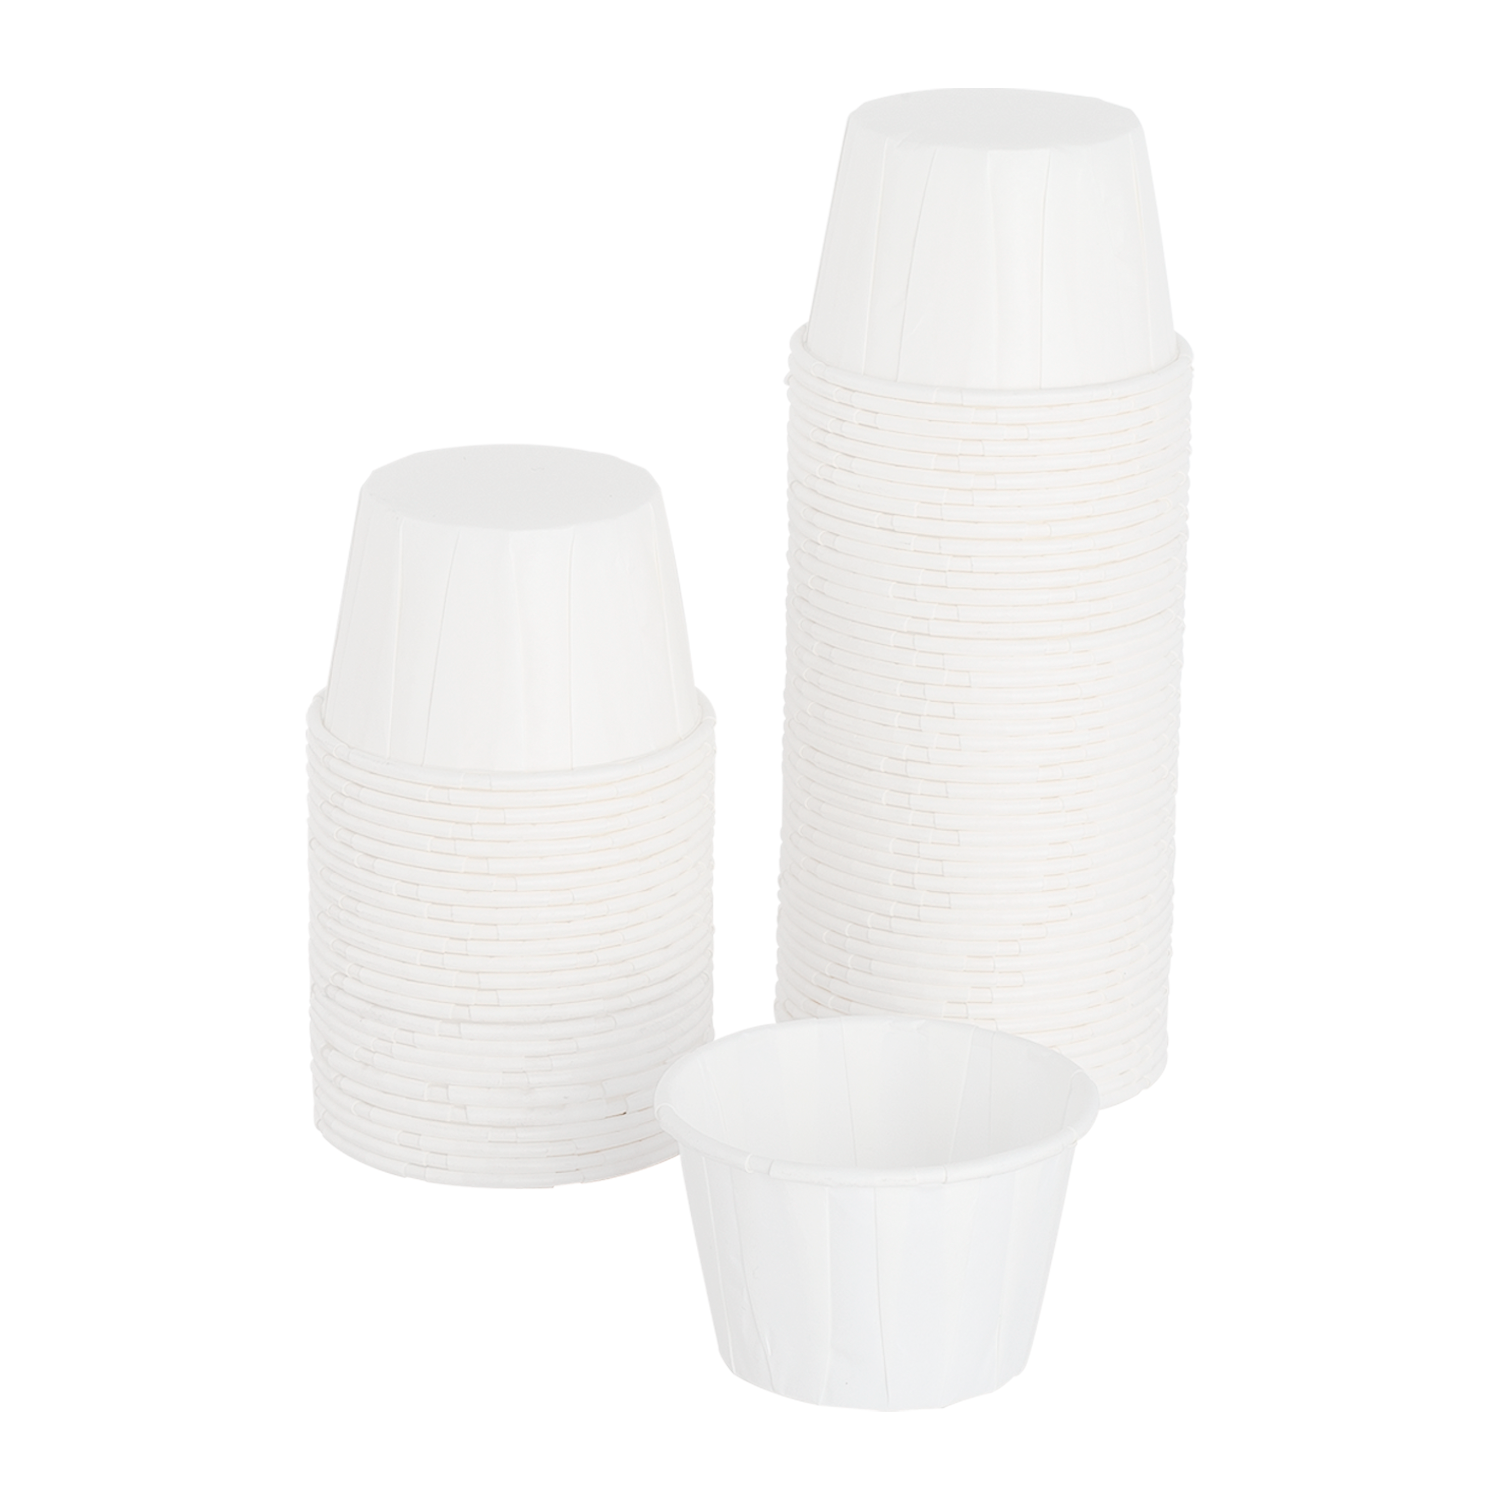 Karat 3.25 oz Paper Portion Cups, White - 5,000 pcs